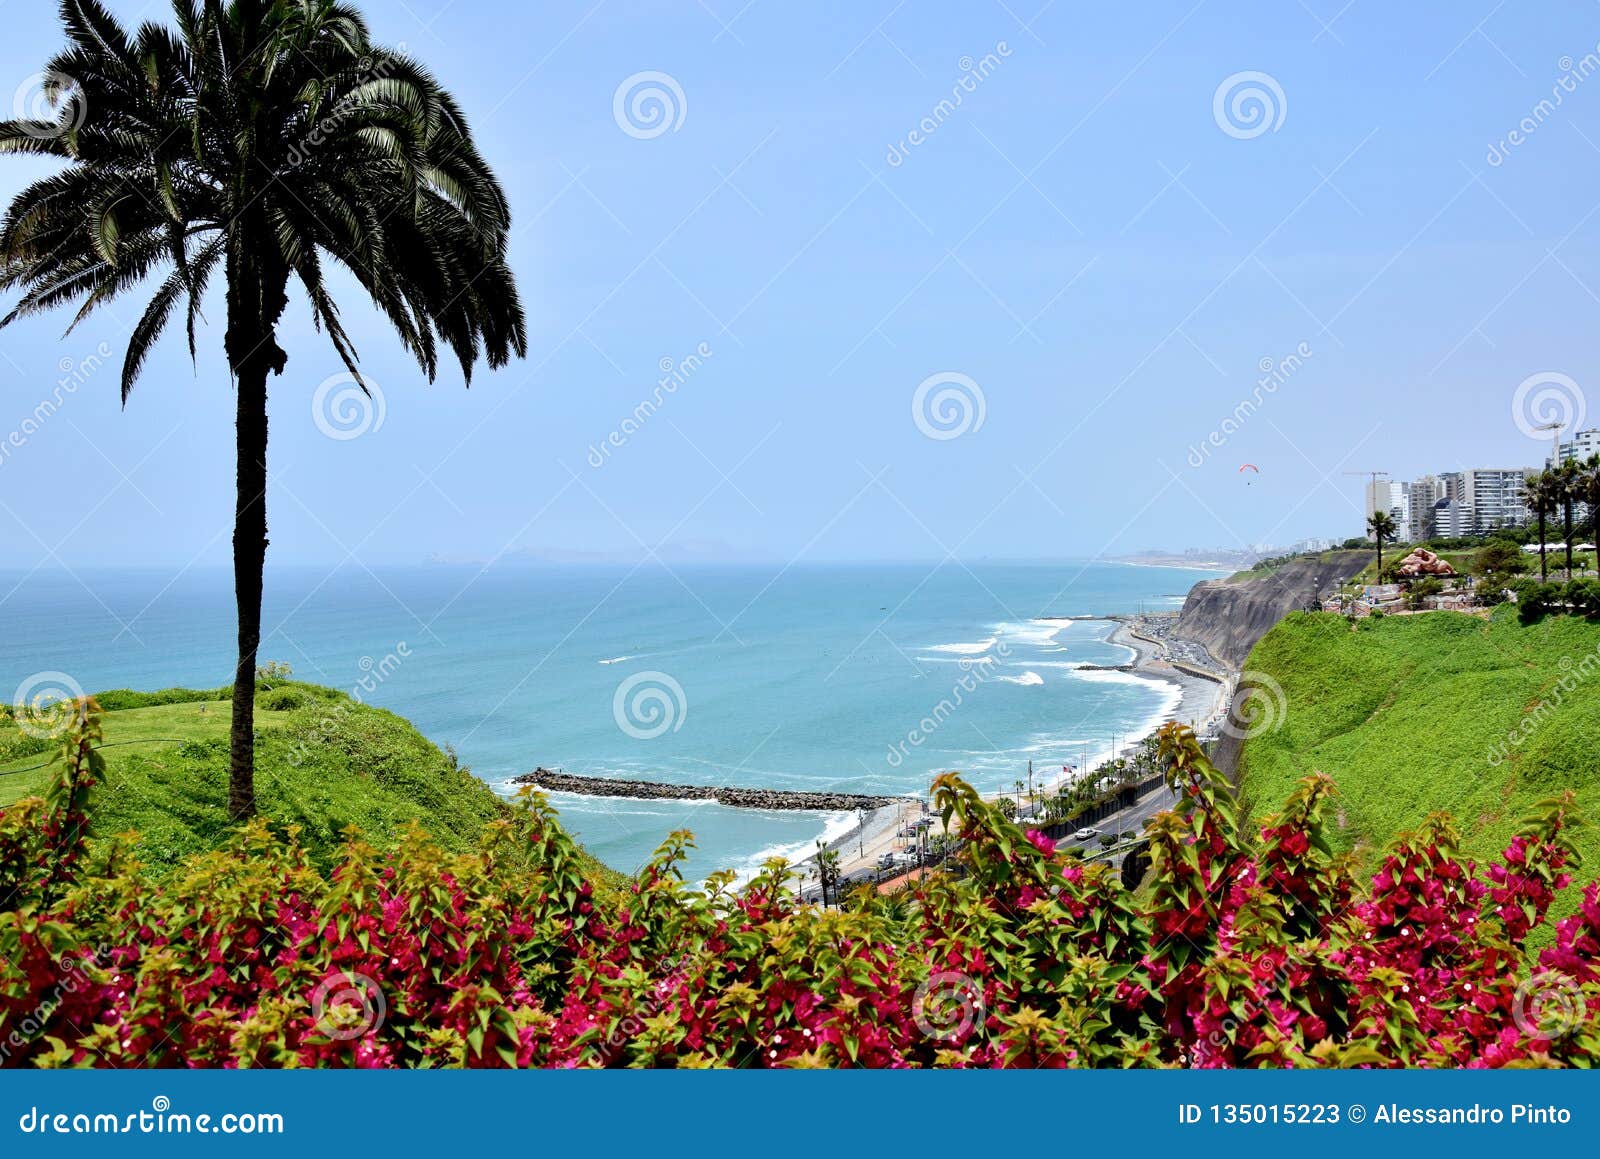 view of the coastline in lima, peru